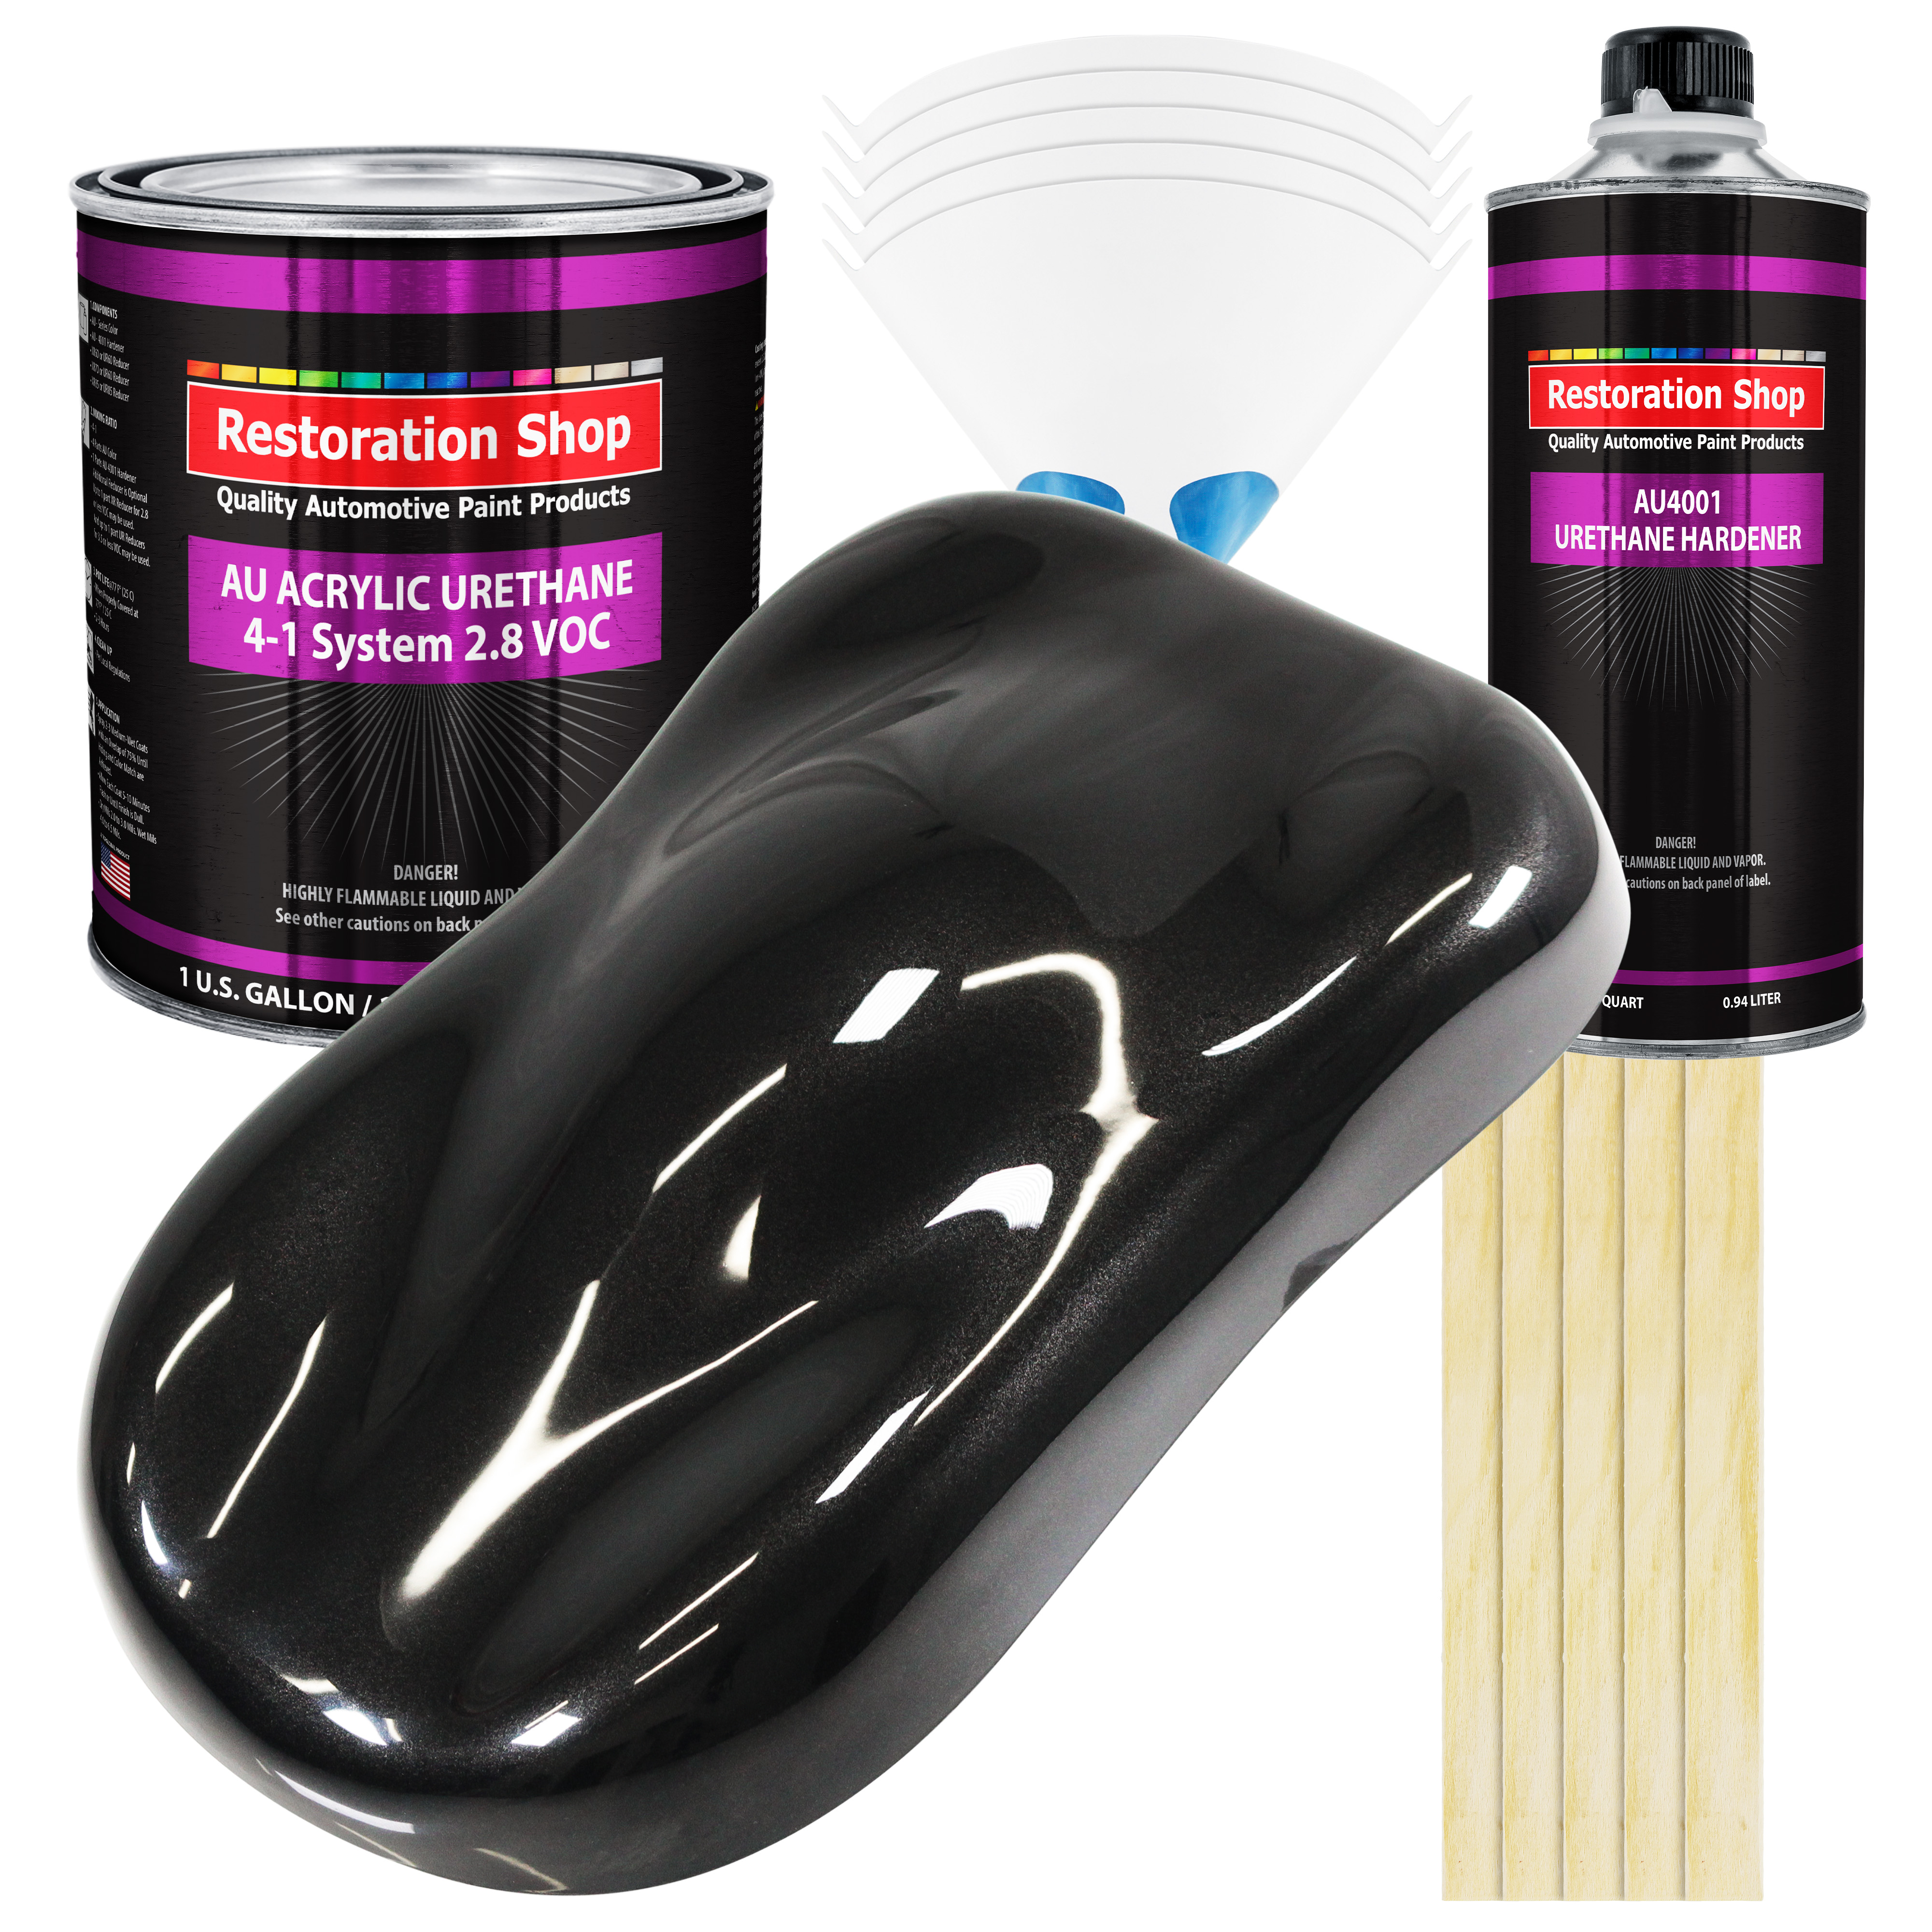 Restoration Shop Black Diamond Firemist Acrylic Urethane Auto Paint Complete Gallon Paint Kit, Single Stage High Gloss - image 1 of 5